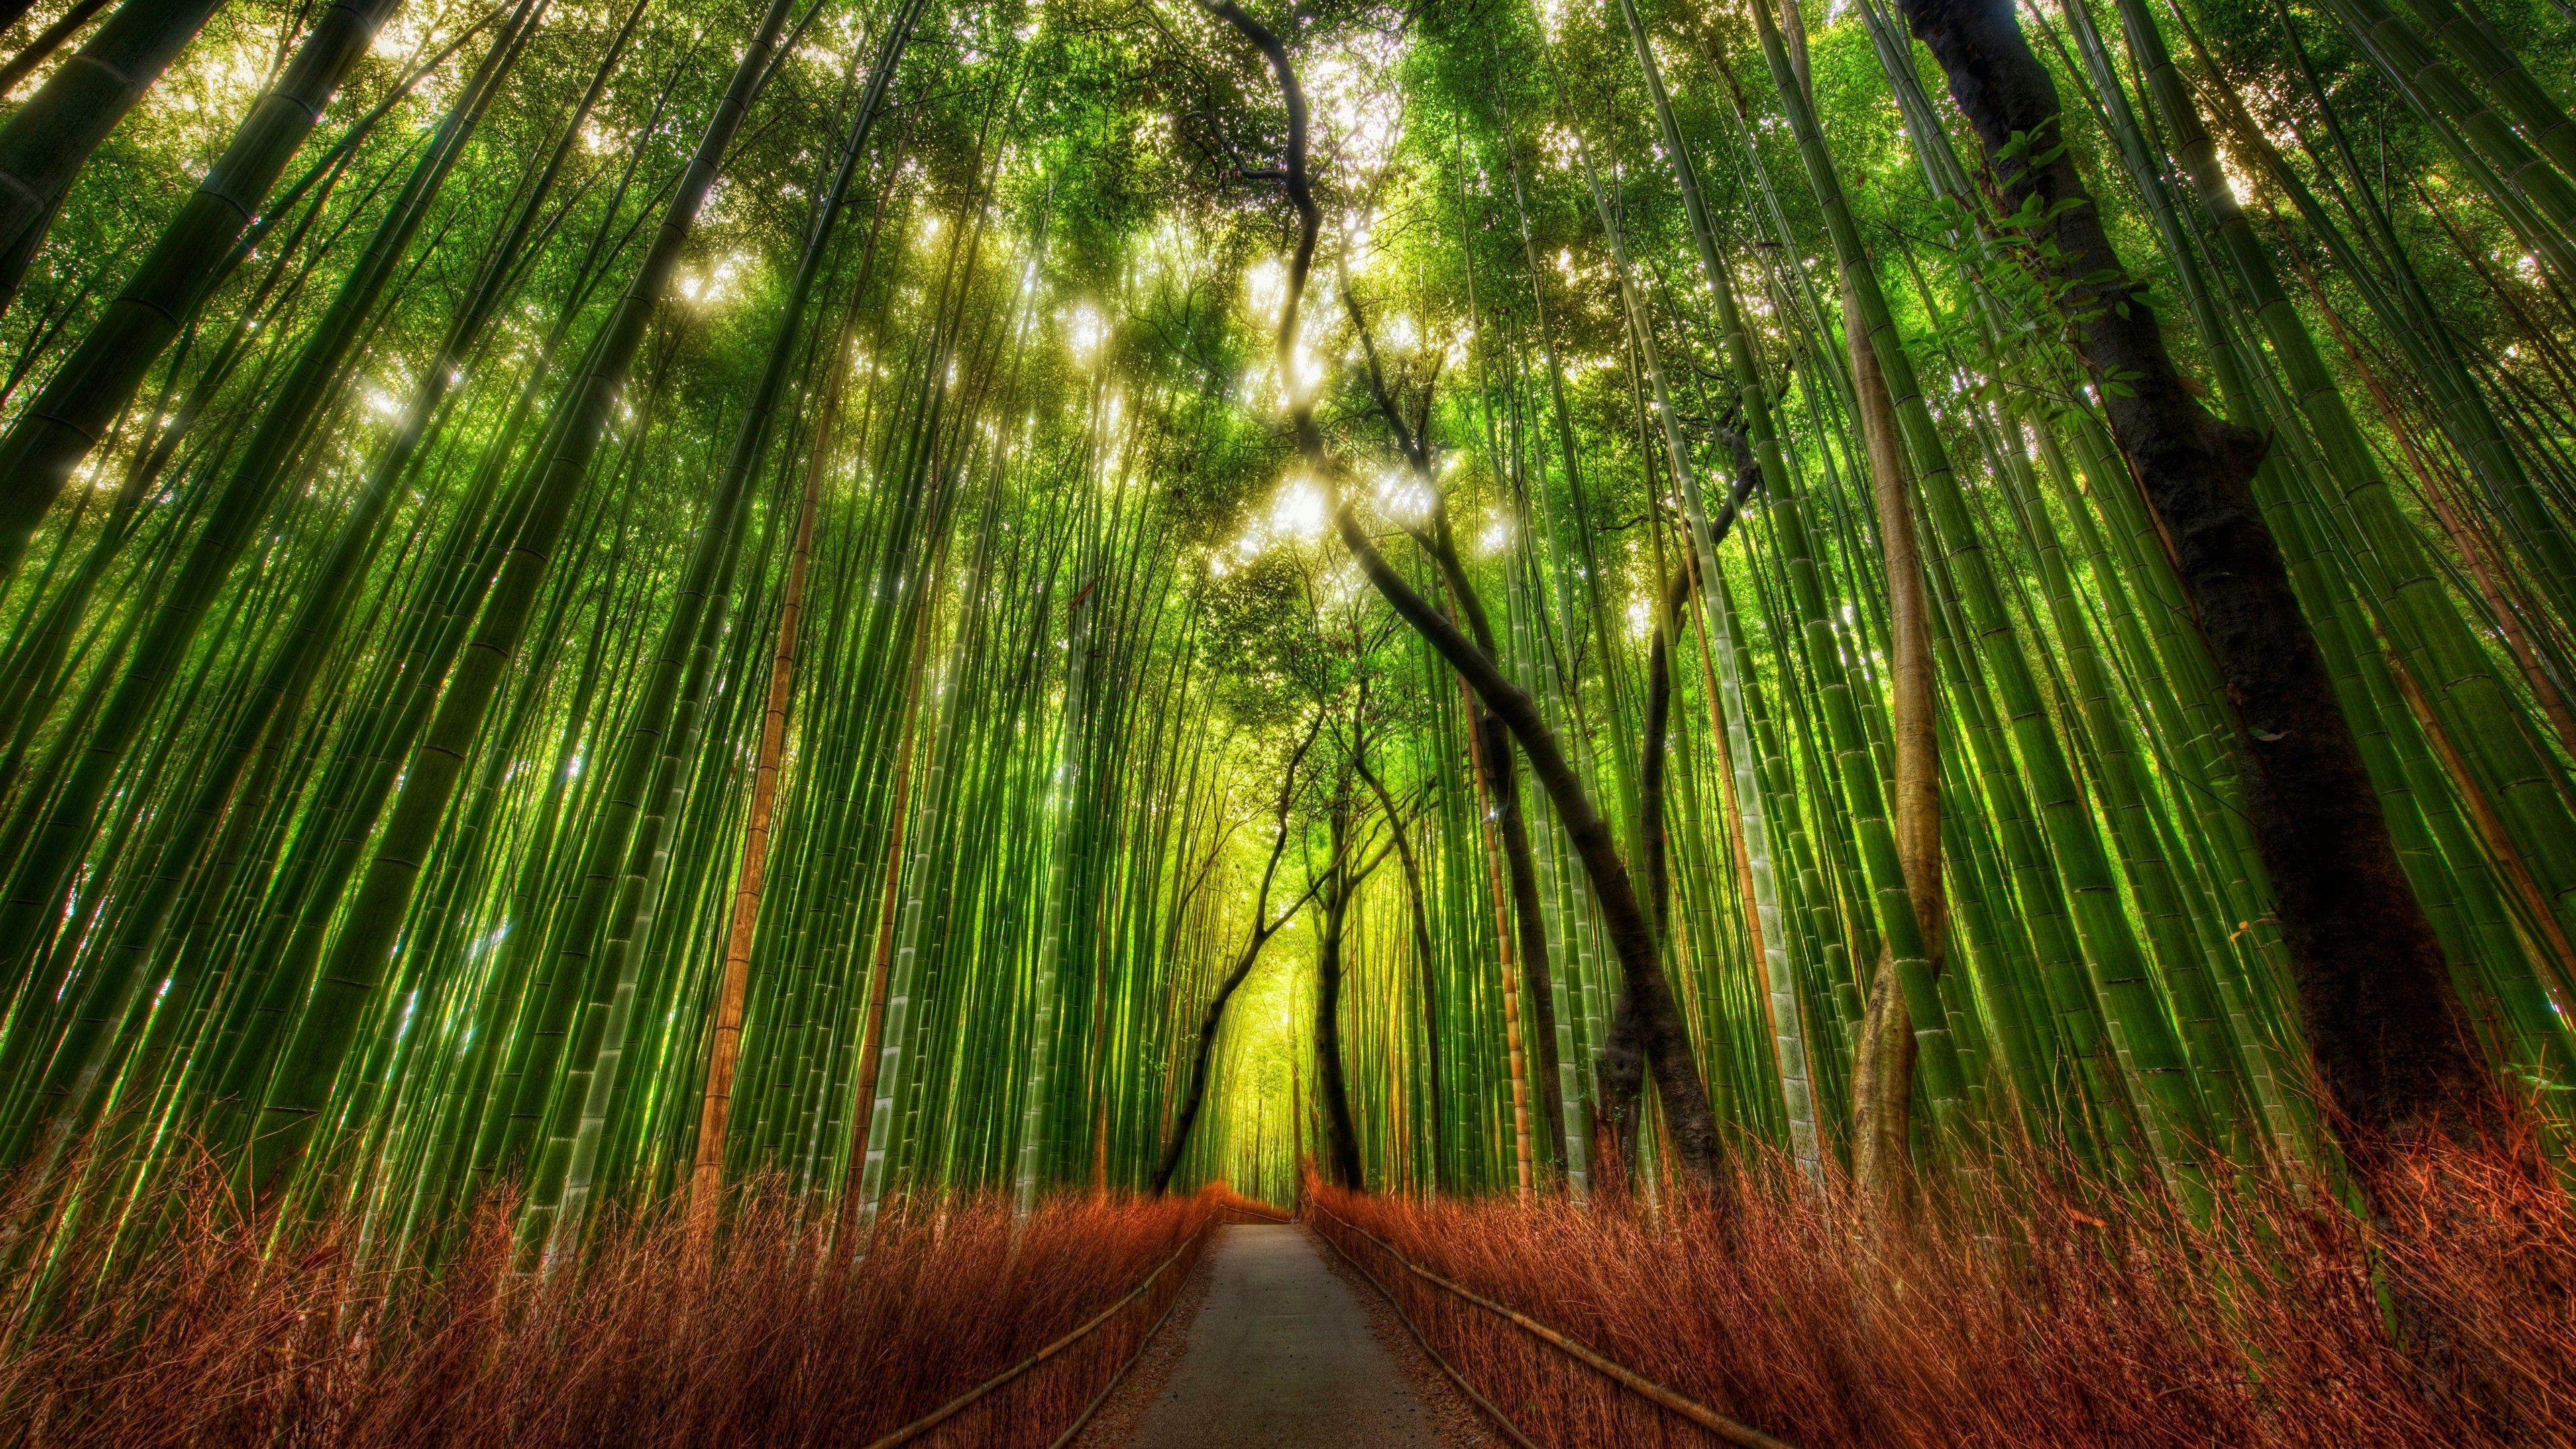 Green Bamboo Forest Wallpaper 3840x2160 ID55913